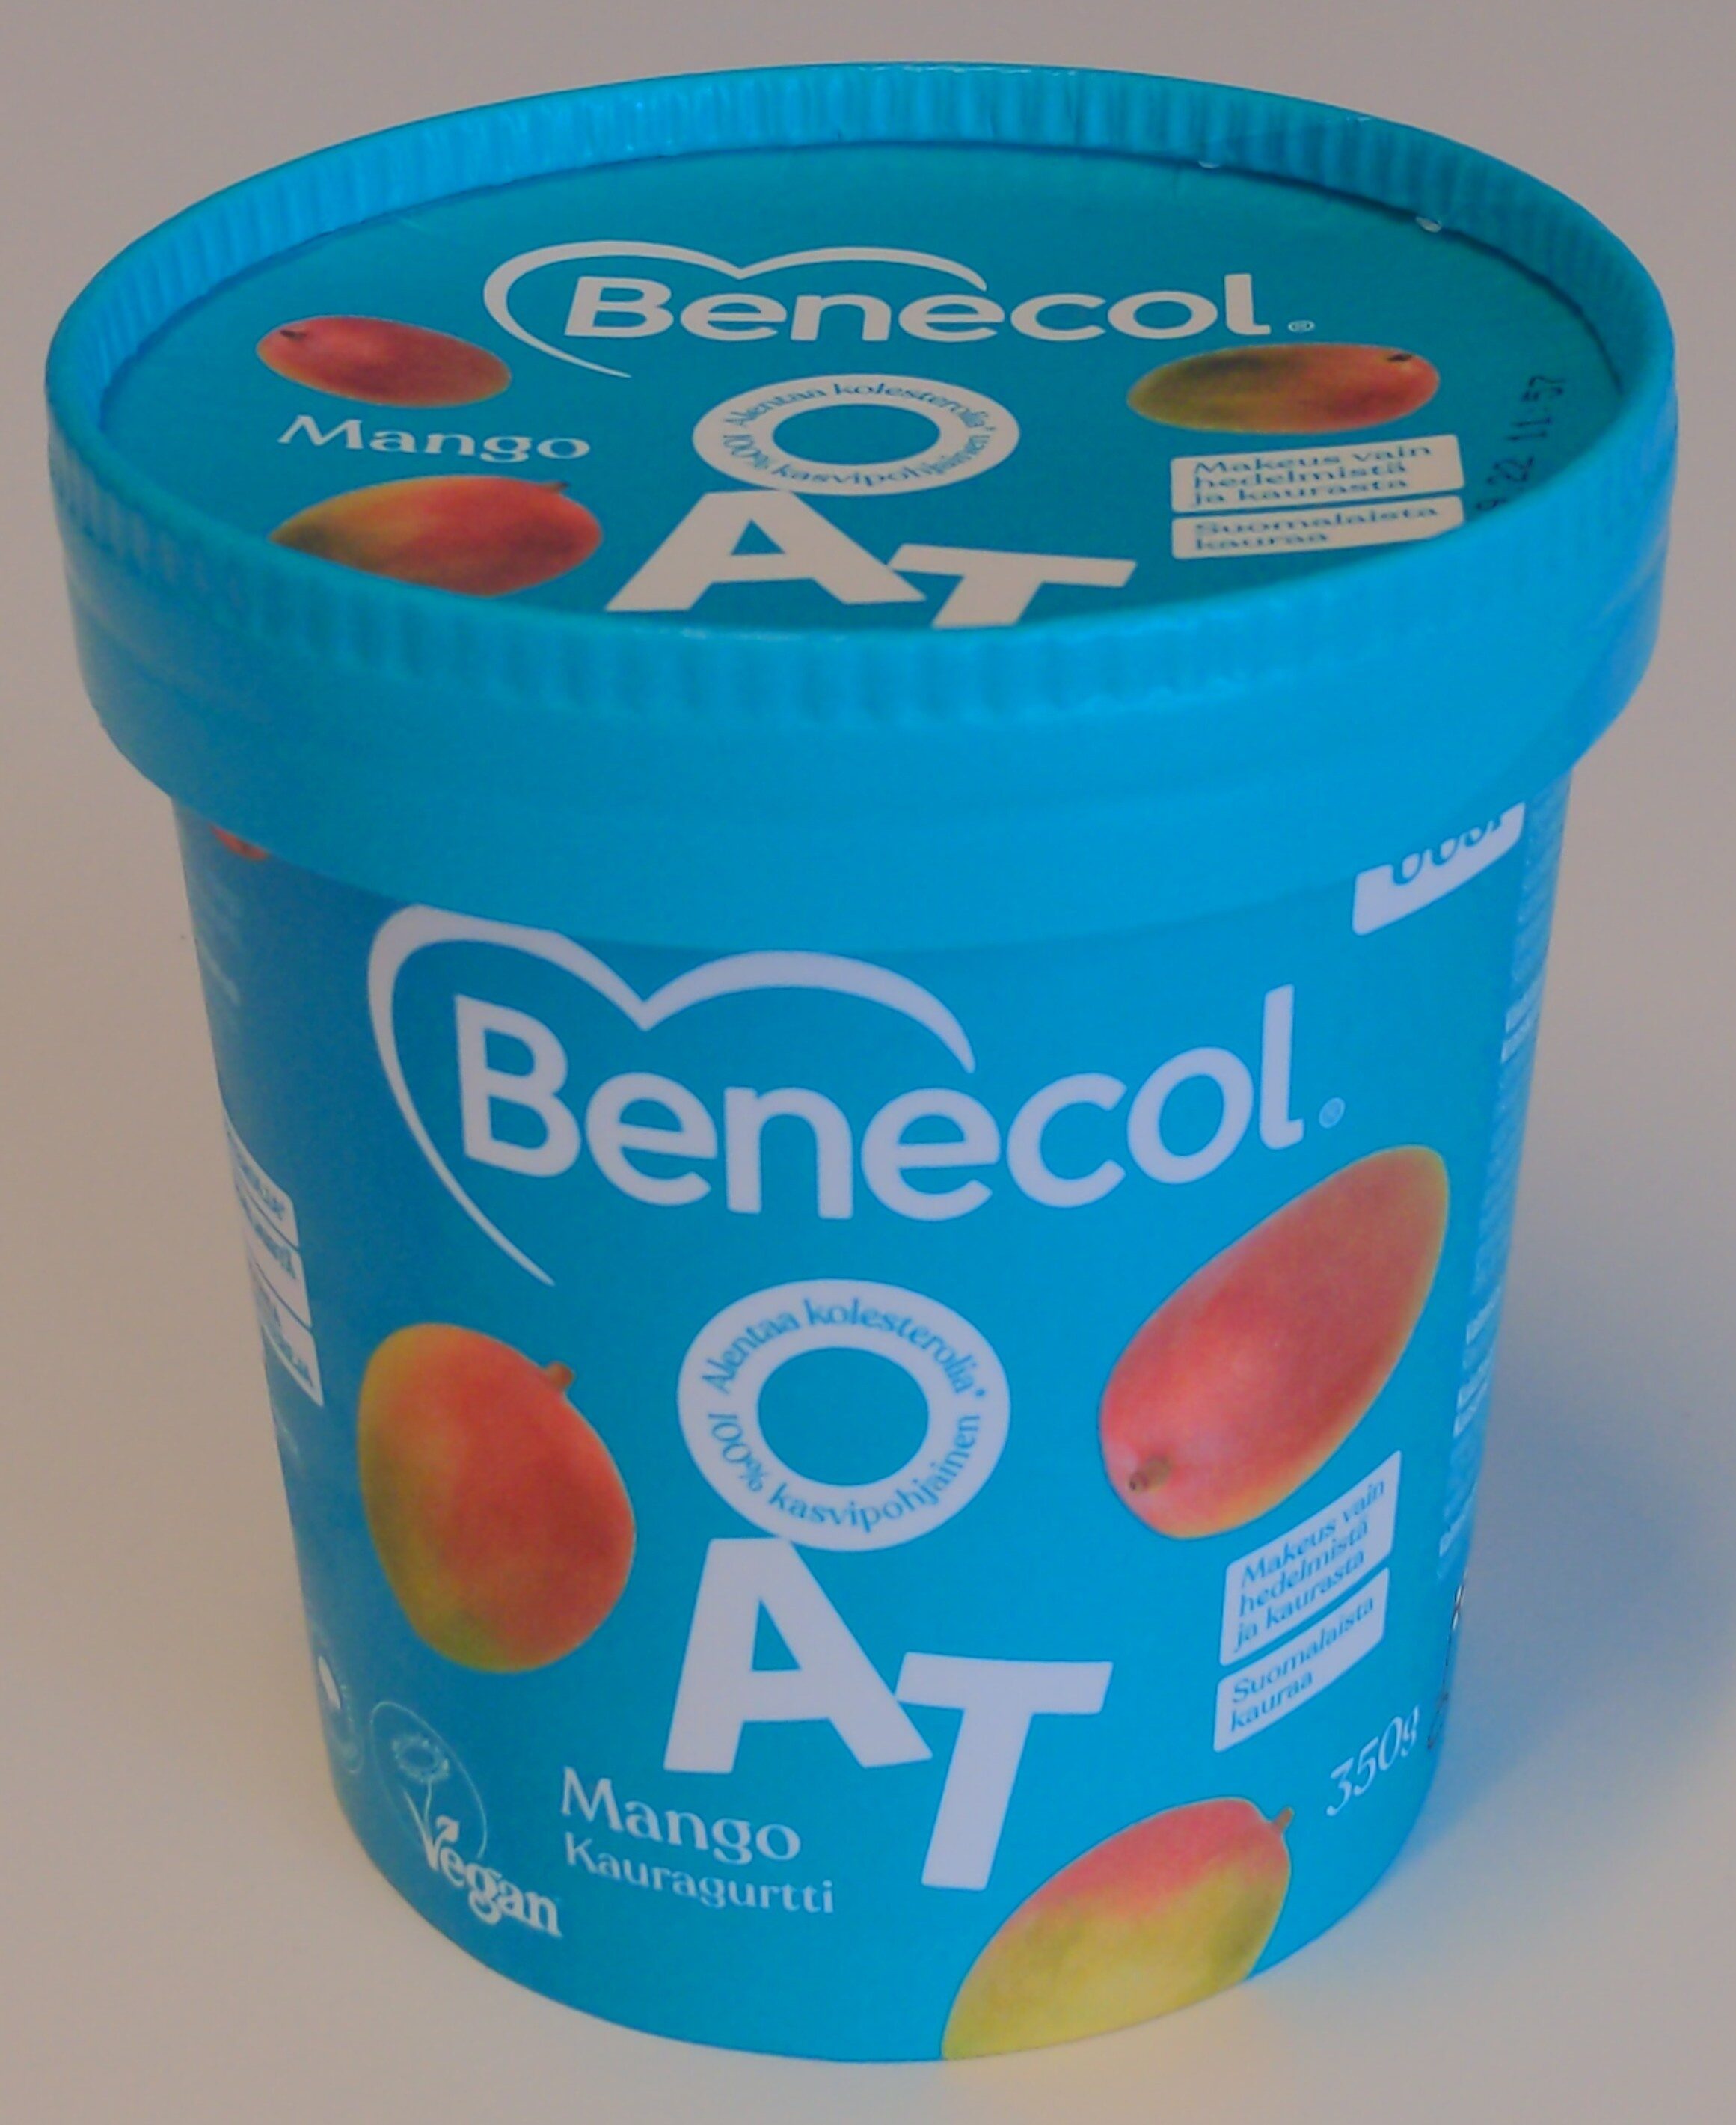 Benecol Oat Kauragurtti Mango - Producto - fi